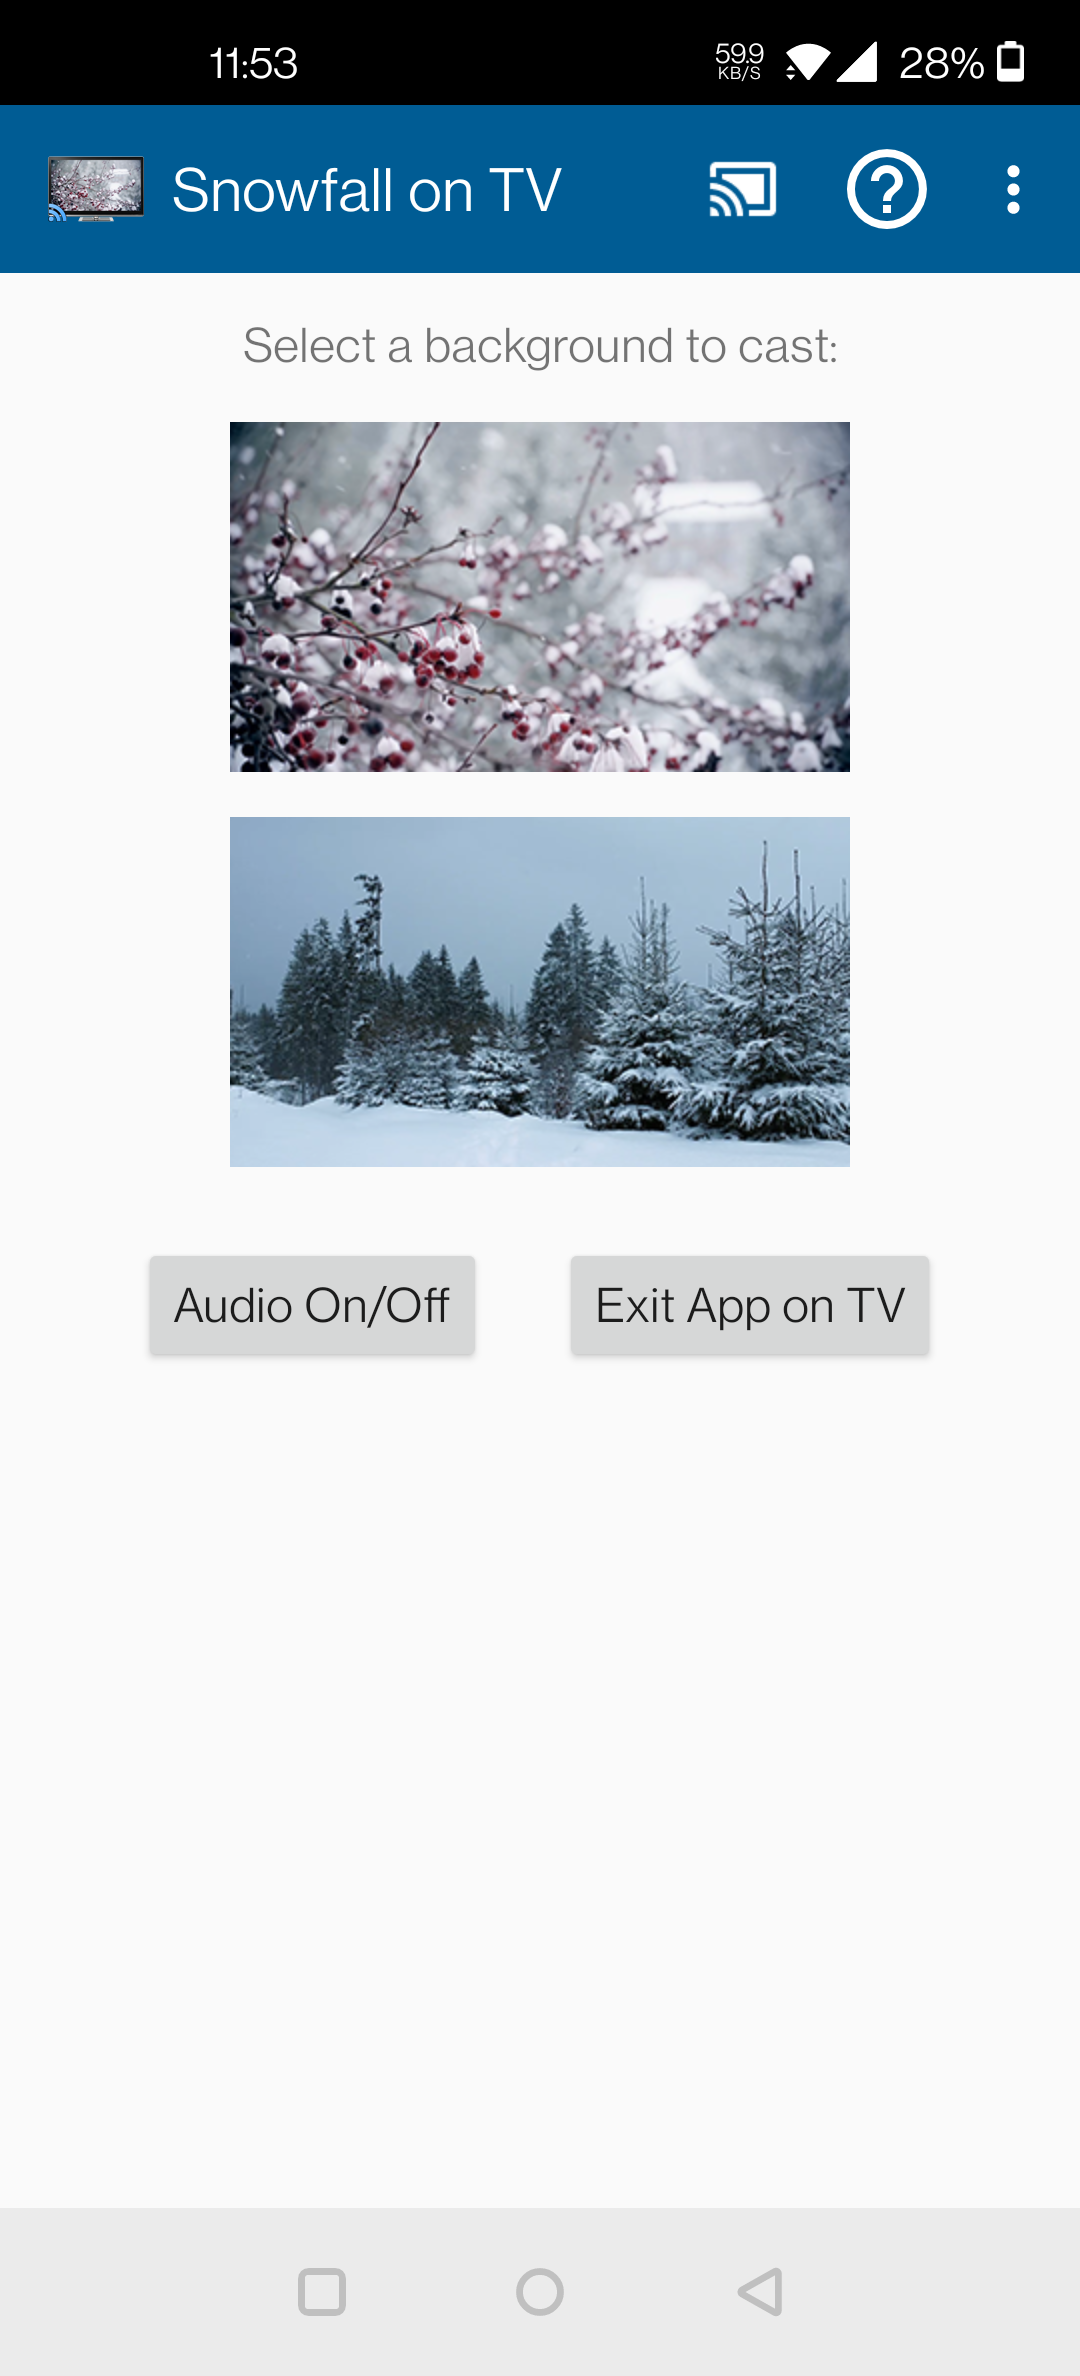 Android application Snowfall on TV via Chromecast screenshort